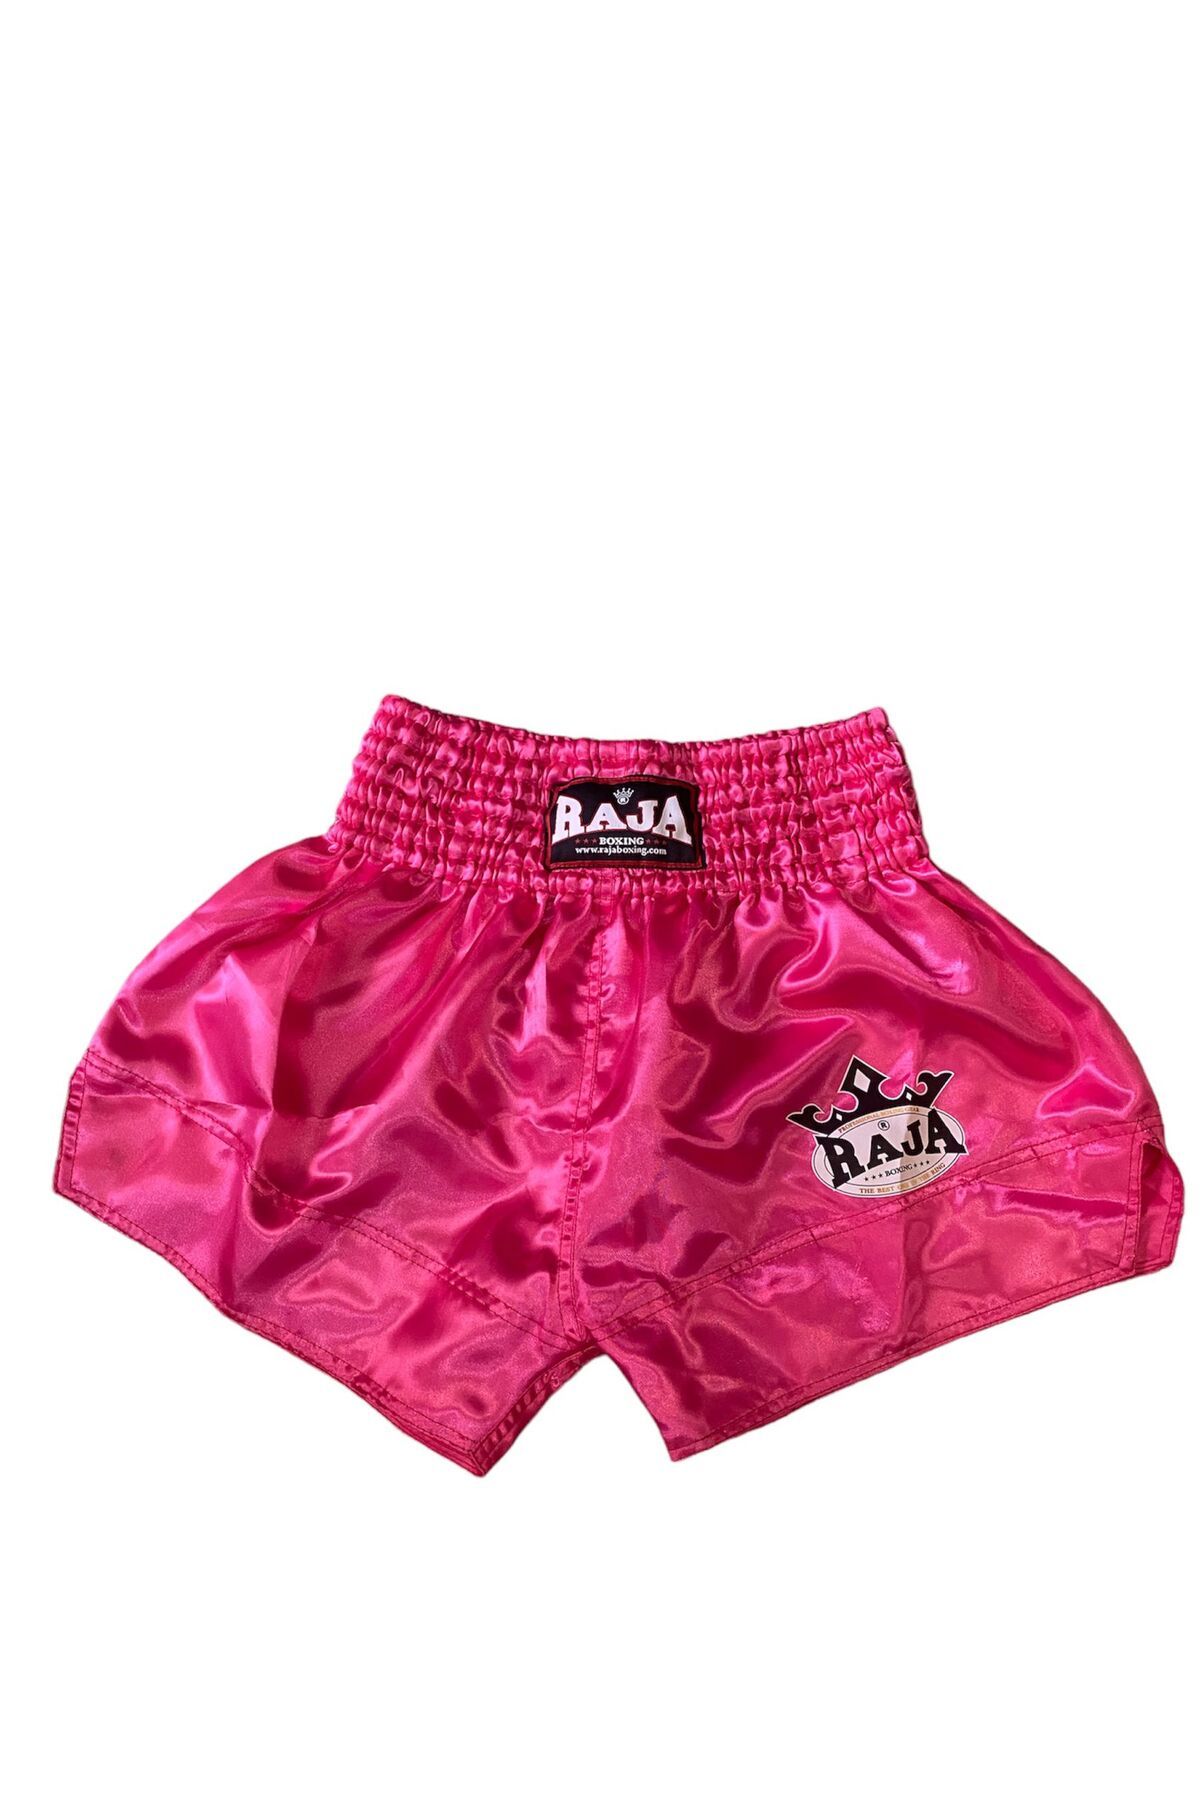 Raja Classic Muay Thai Shorts ( PINK)